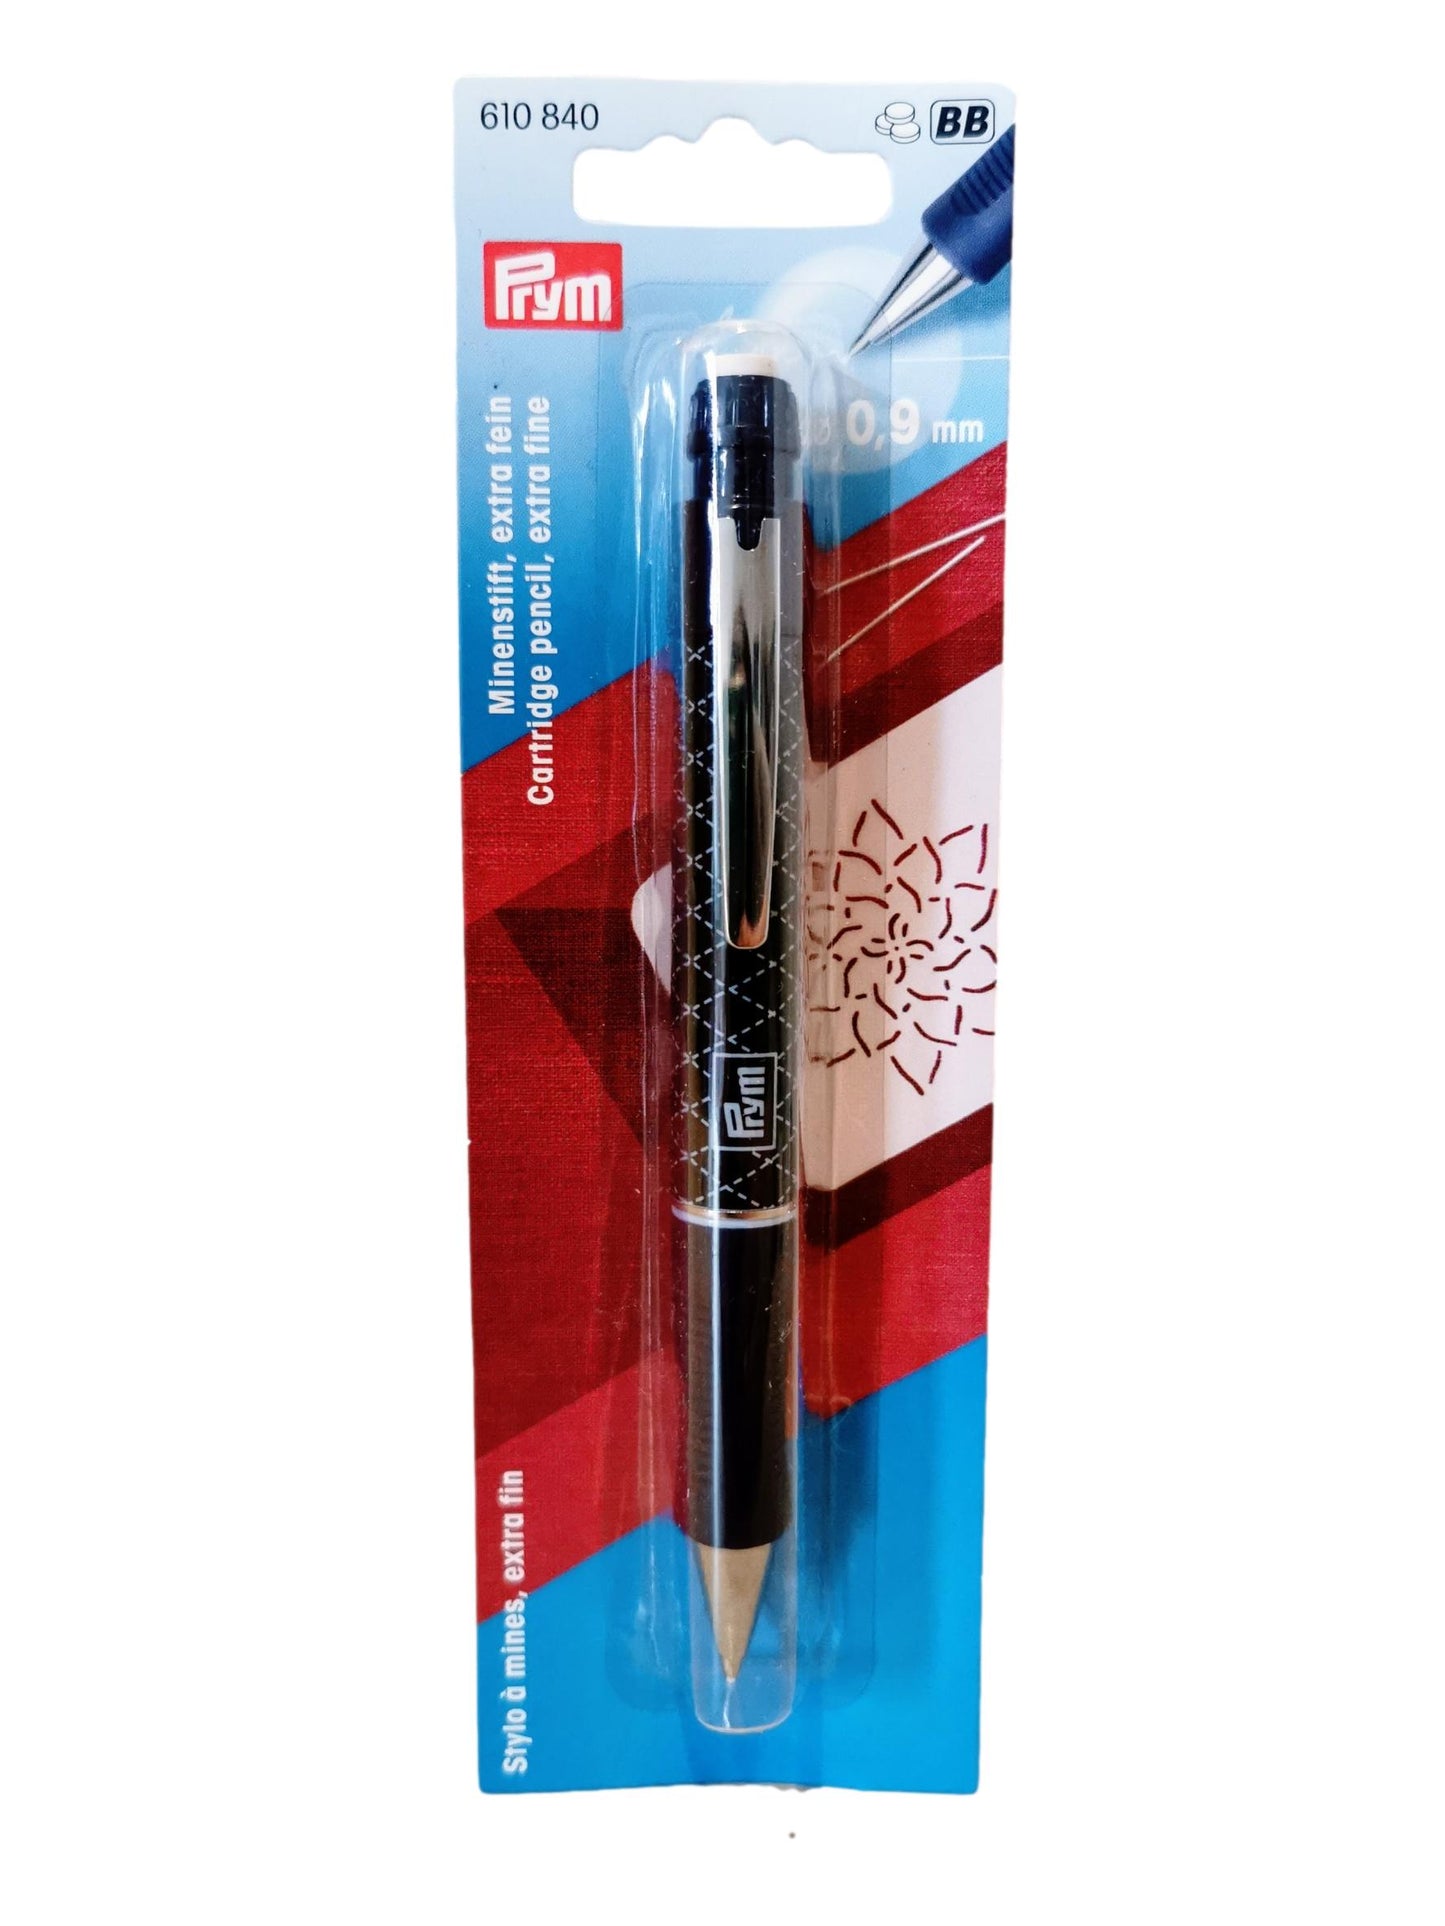 Prym  - Chalk Pencil - Extra Fine (0.9mm) - Purple